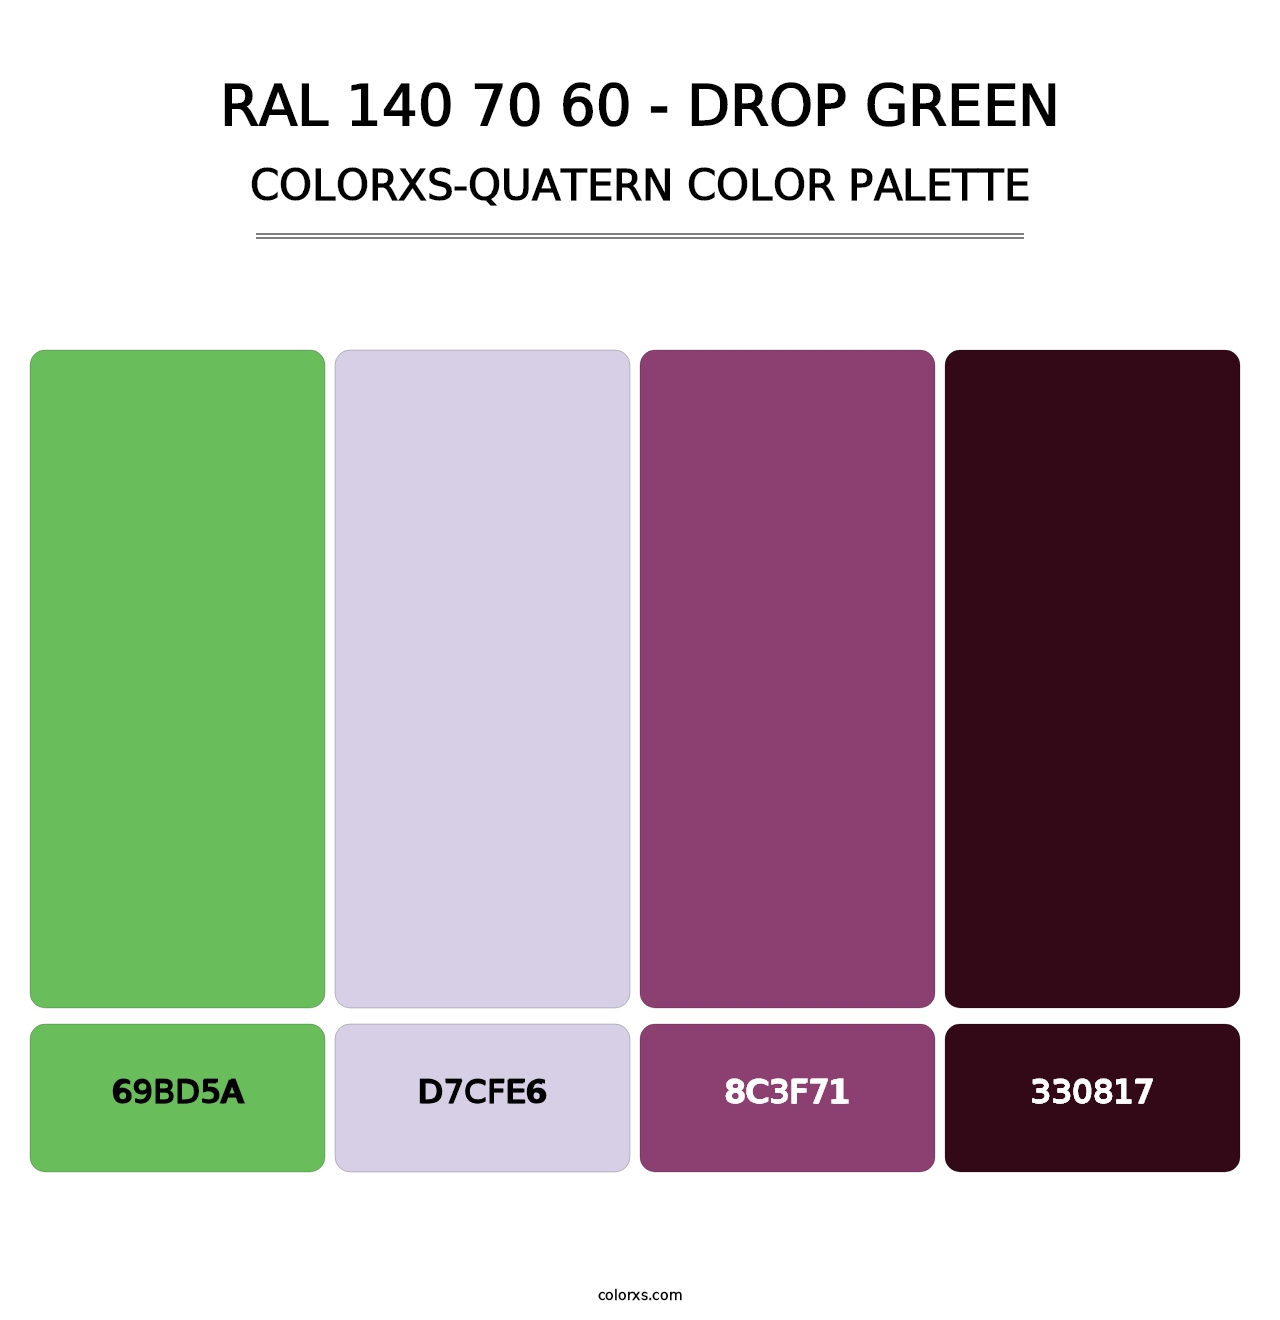 RAL 140 70 60 - Drop Green - Colorxs Quatern Palette